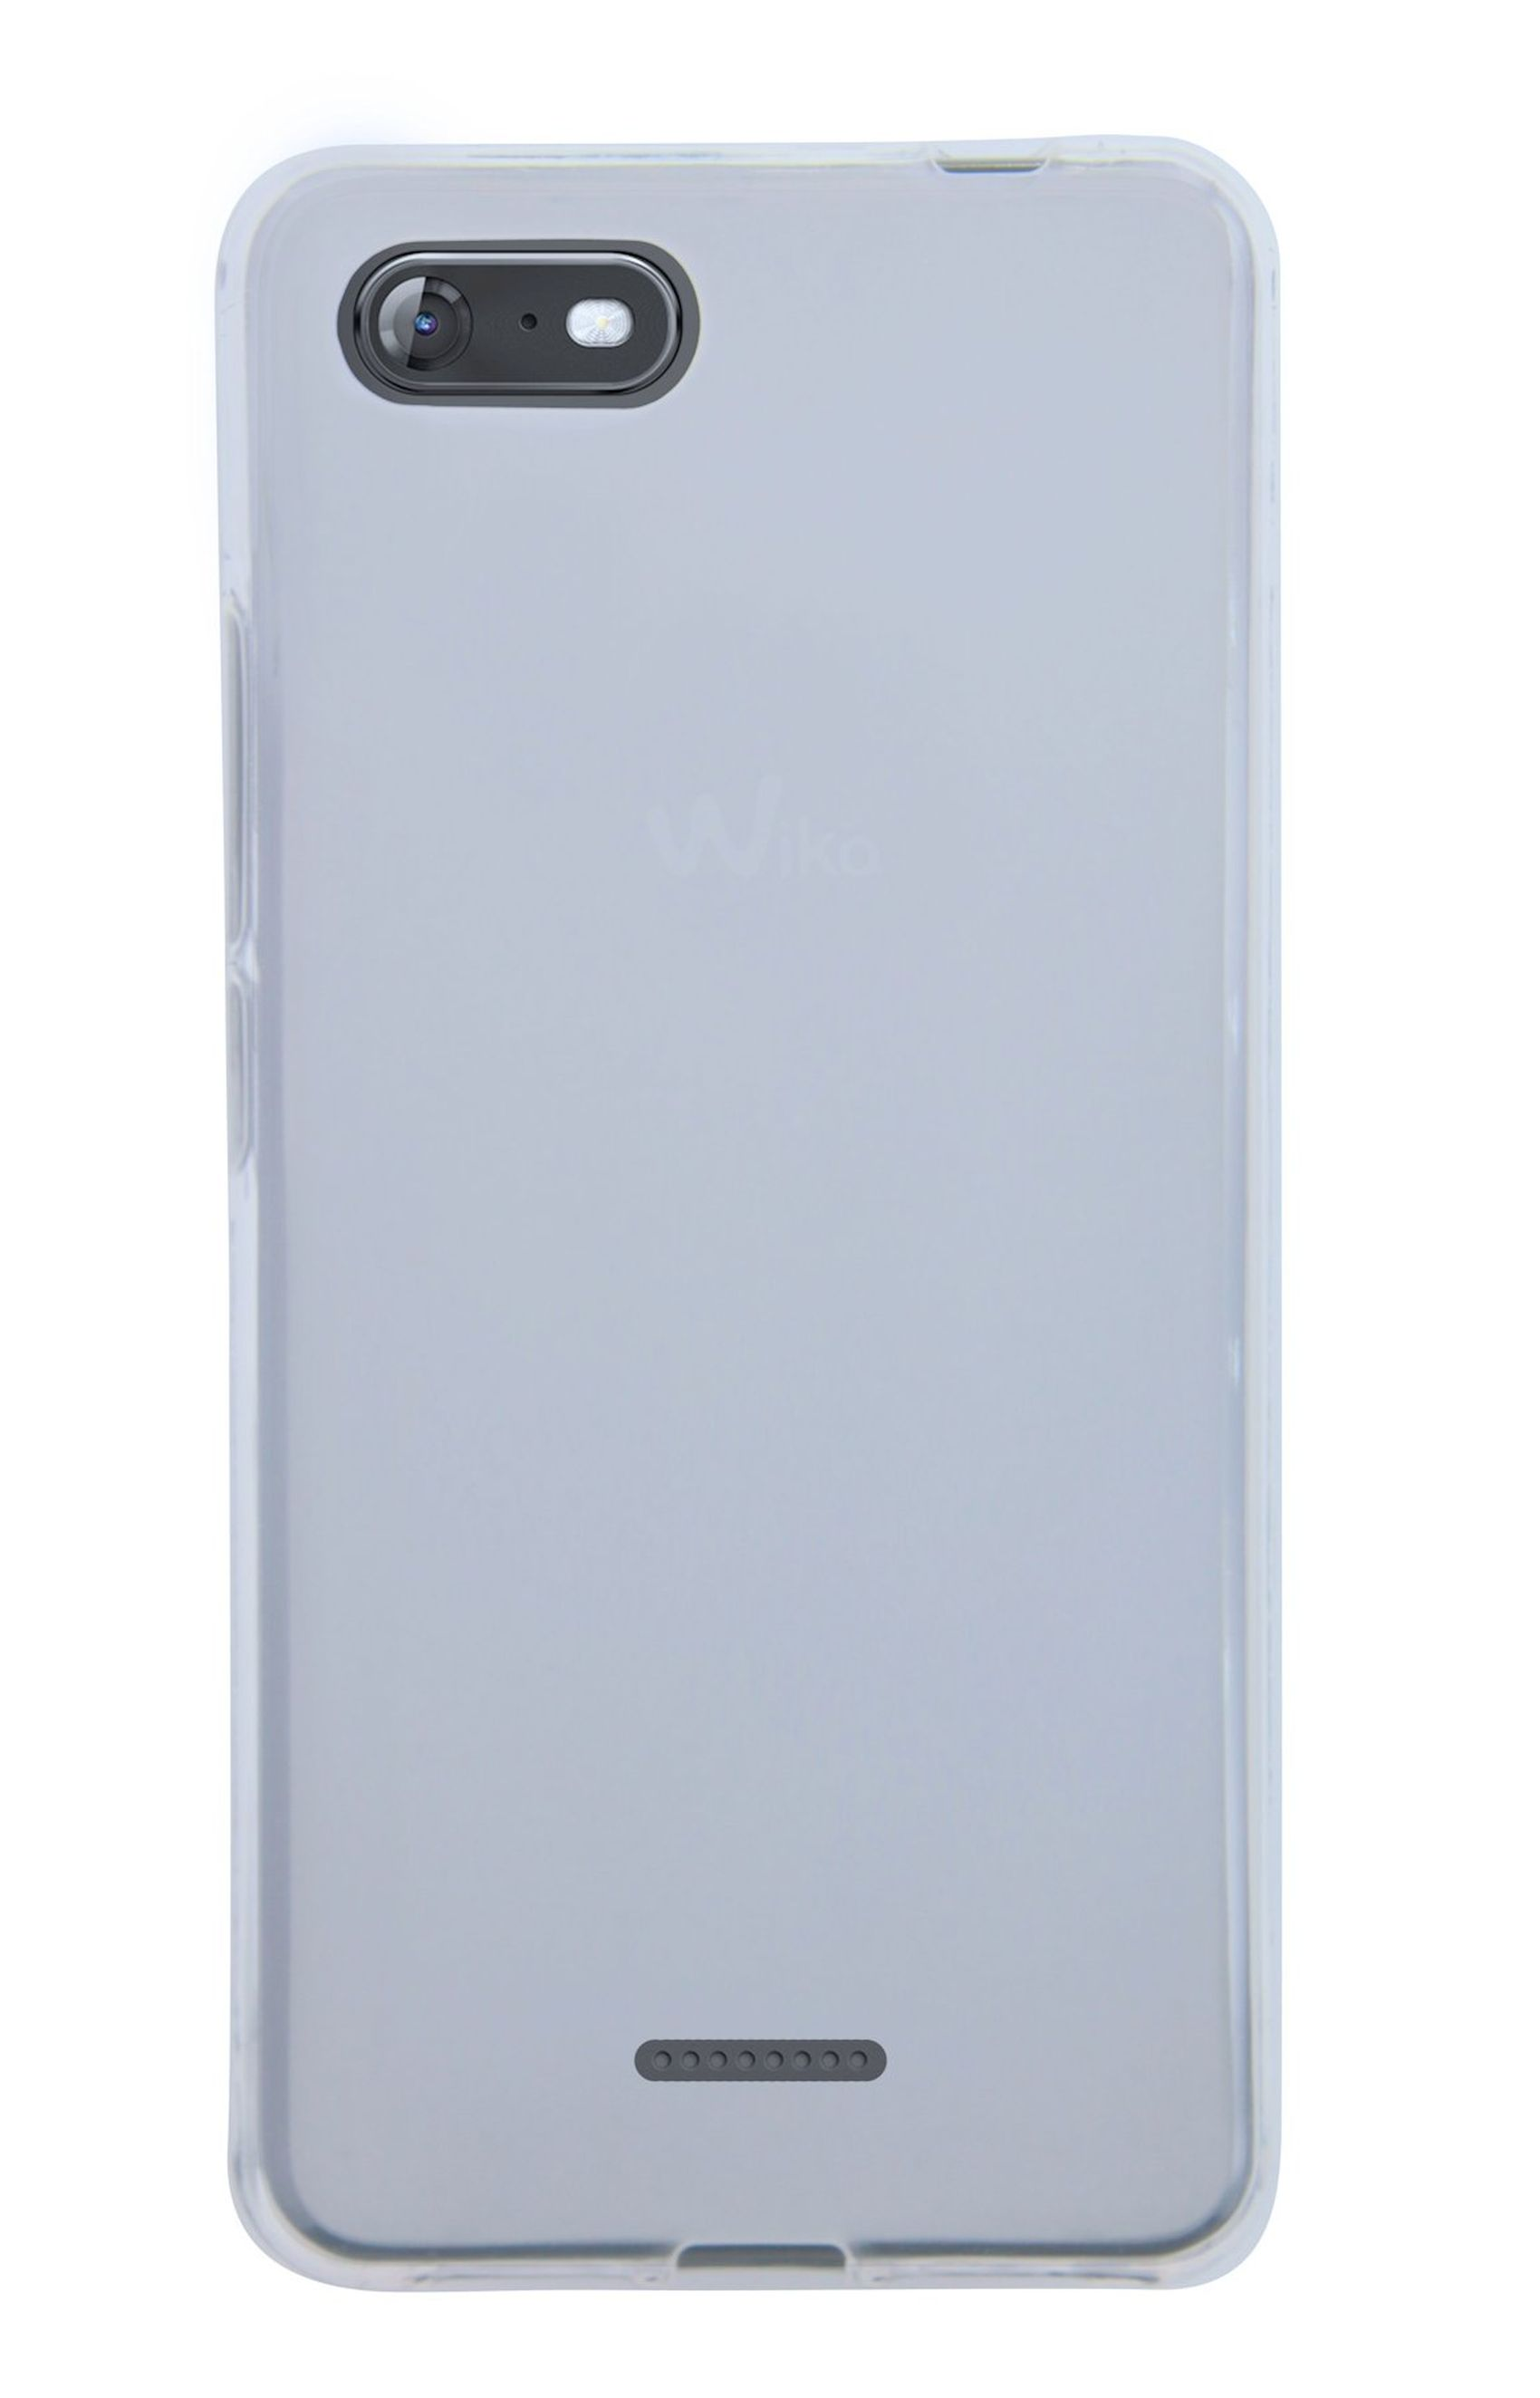 COFI cofi1453® Silikon Hülle Basic Handy mit Transparent WIKO Frosted, TPU Case Bumper, Soft Schutz Cover Wiko, kompatibel TOMMY 3, Tommy 3